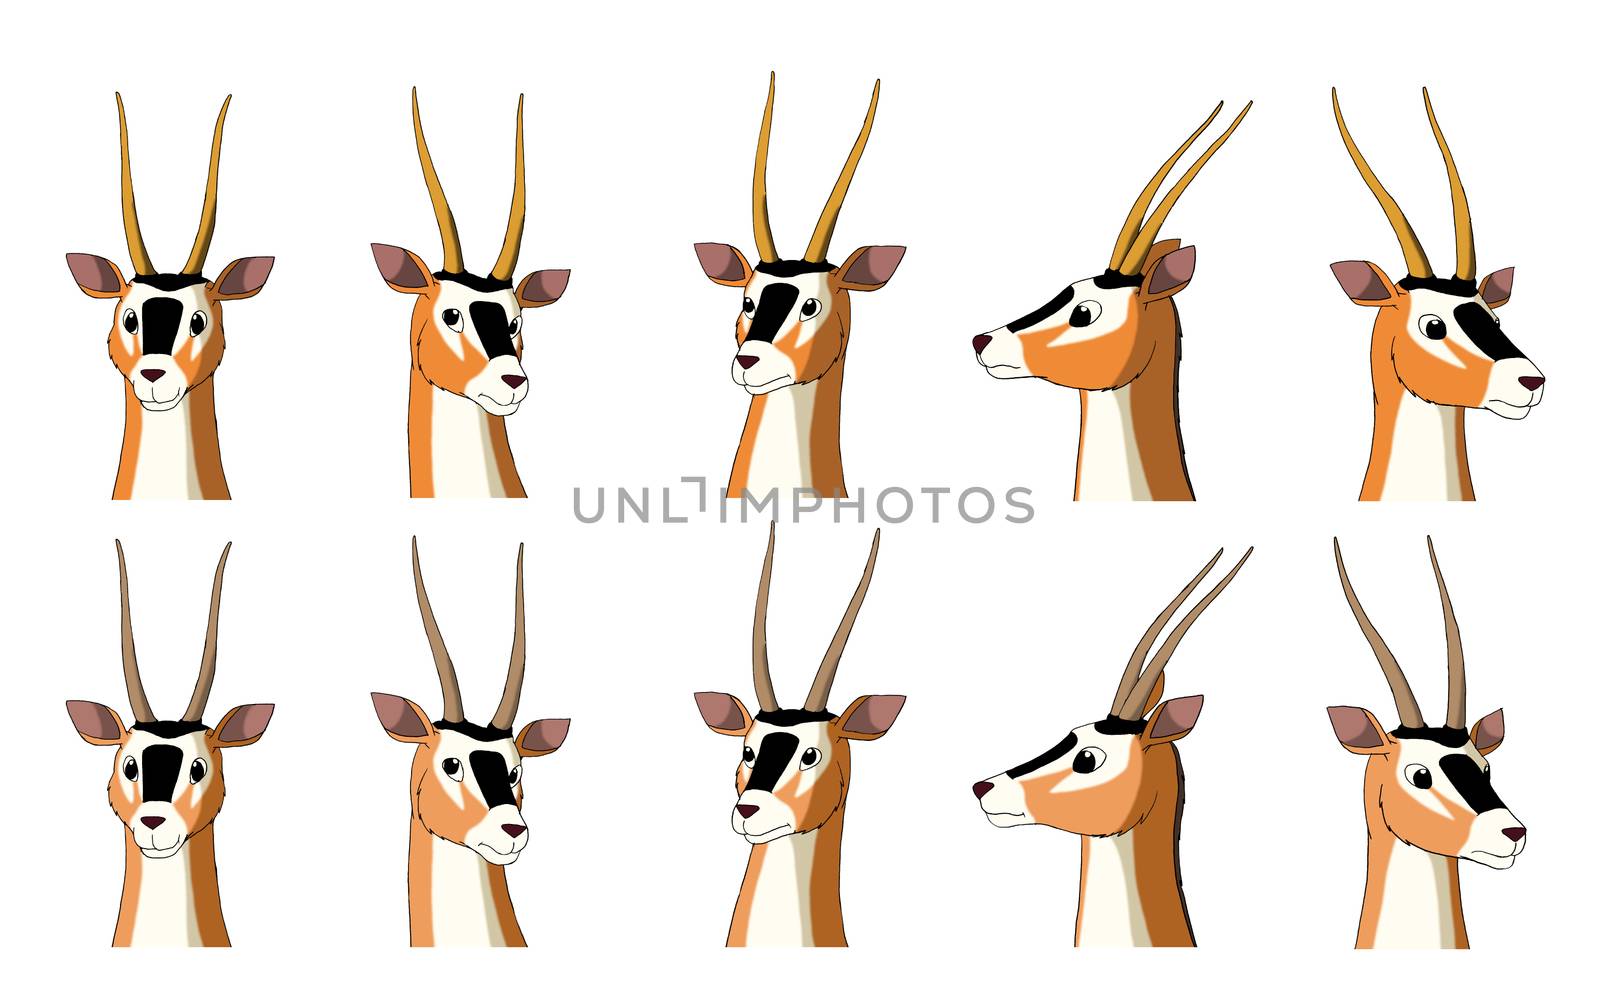 Set of African Antelope Gazelle images. Digital painting  full color cartoon style illustration isolated on white background.